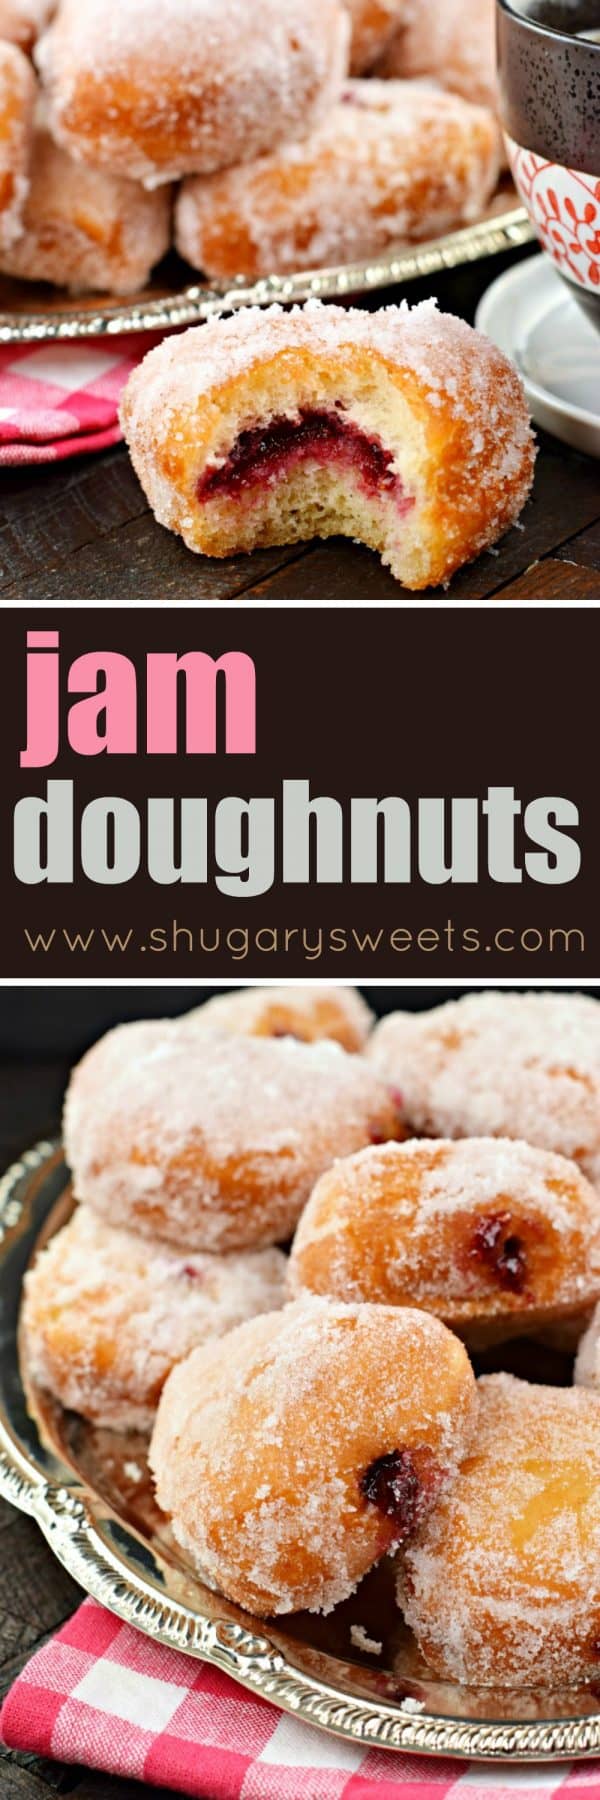 Jam Doughnuts - Shugary Sweets